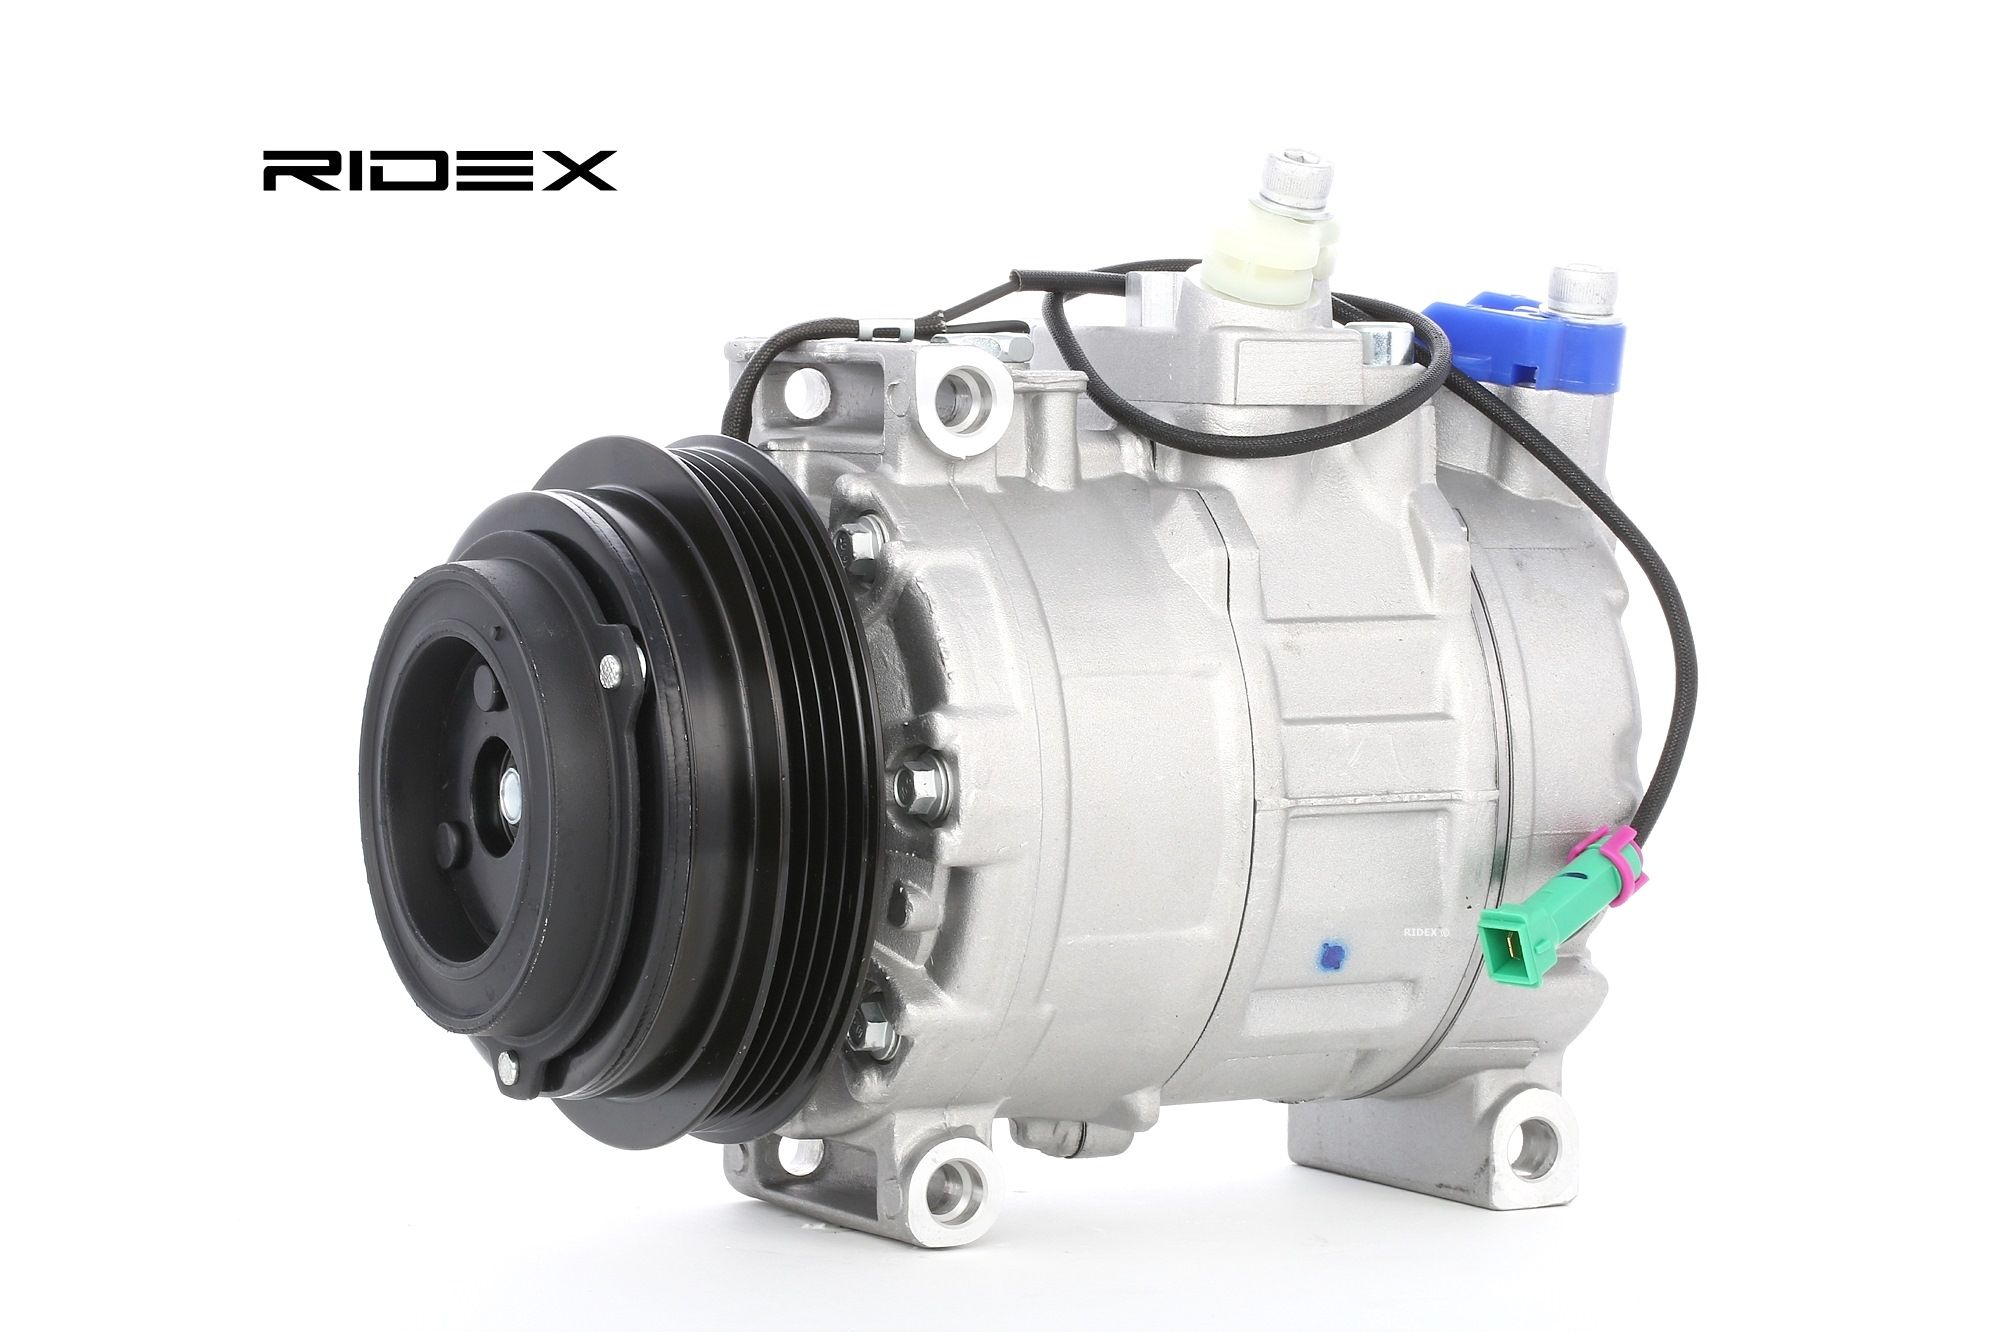 RIDEX 447K0149 Air conditioning compressor 7SBU16C, PAG 46, R 134a, with PAG compressor oil